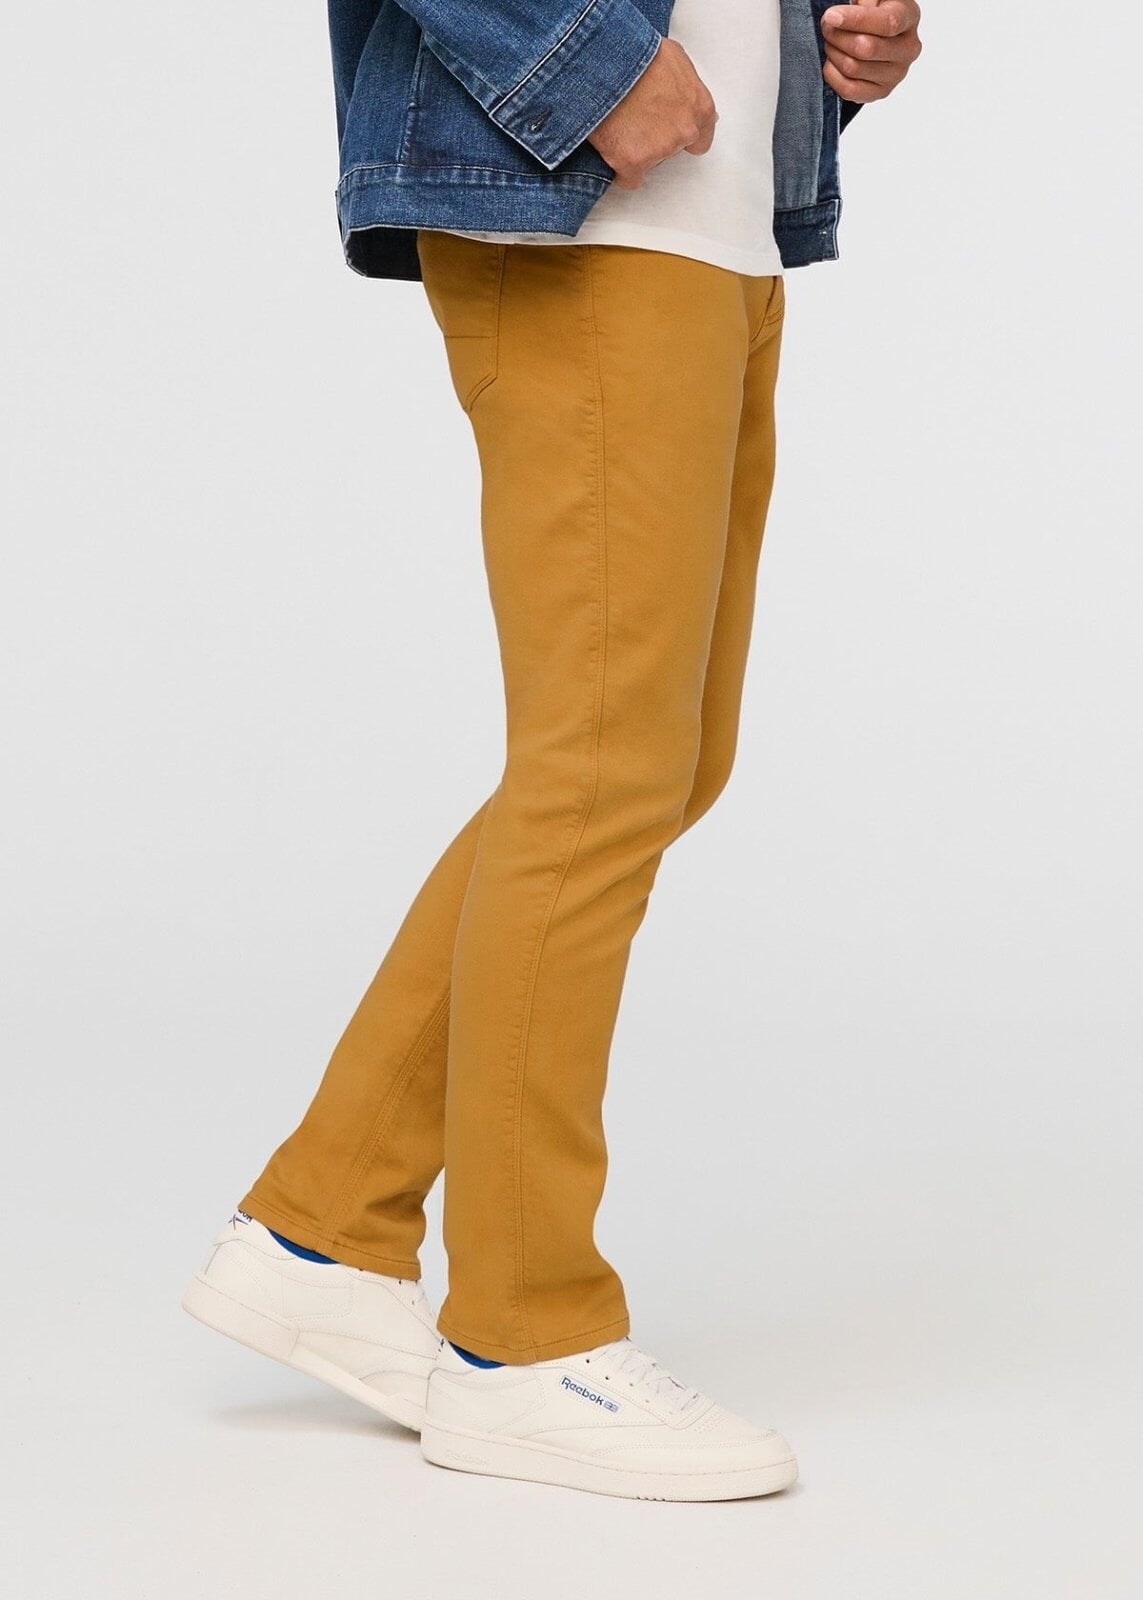 Men's Yellow Blazer, Light Violet Dress Shirt, Yellow Dress Pants, Brown  Leather Belt | Lookastic